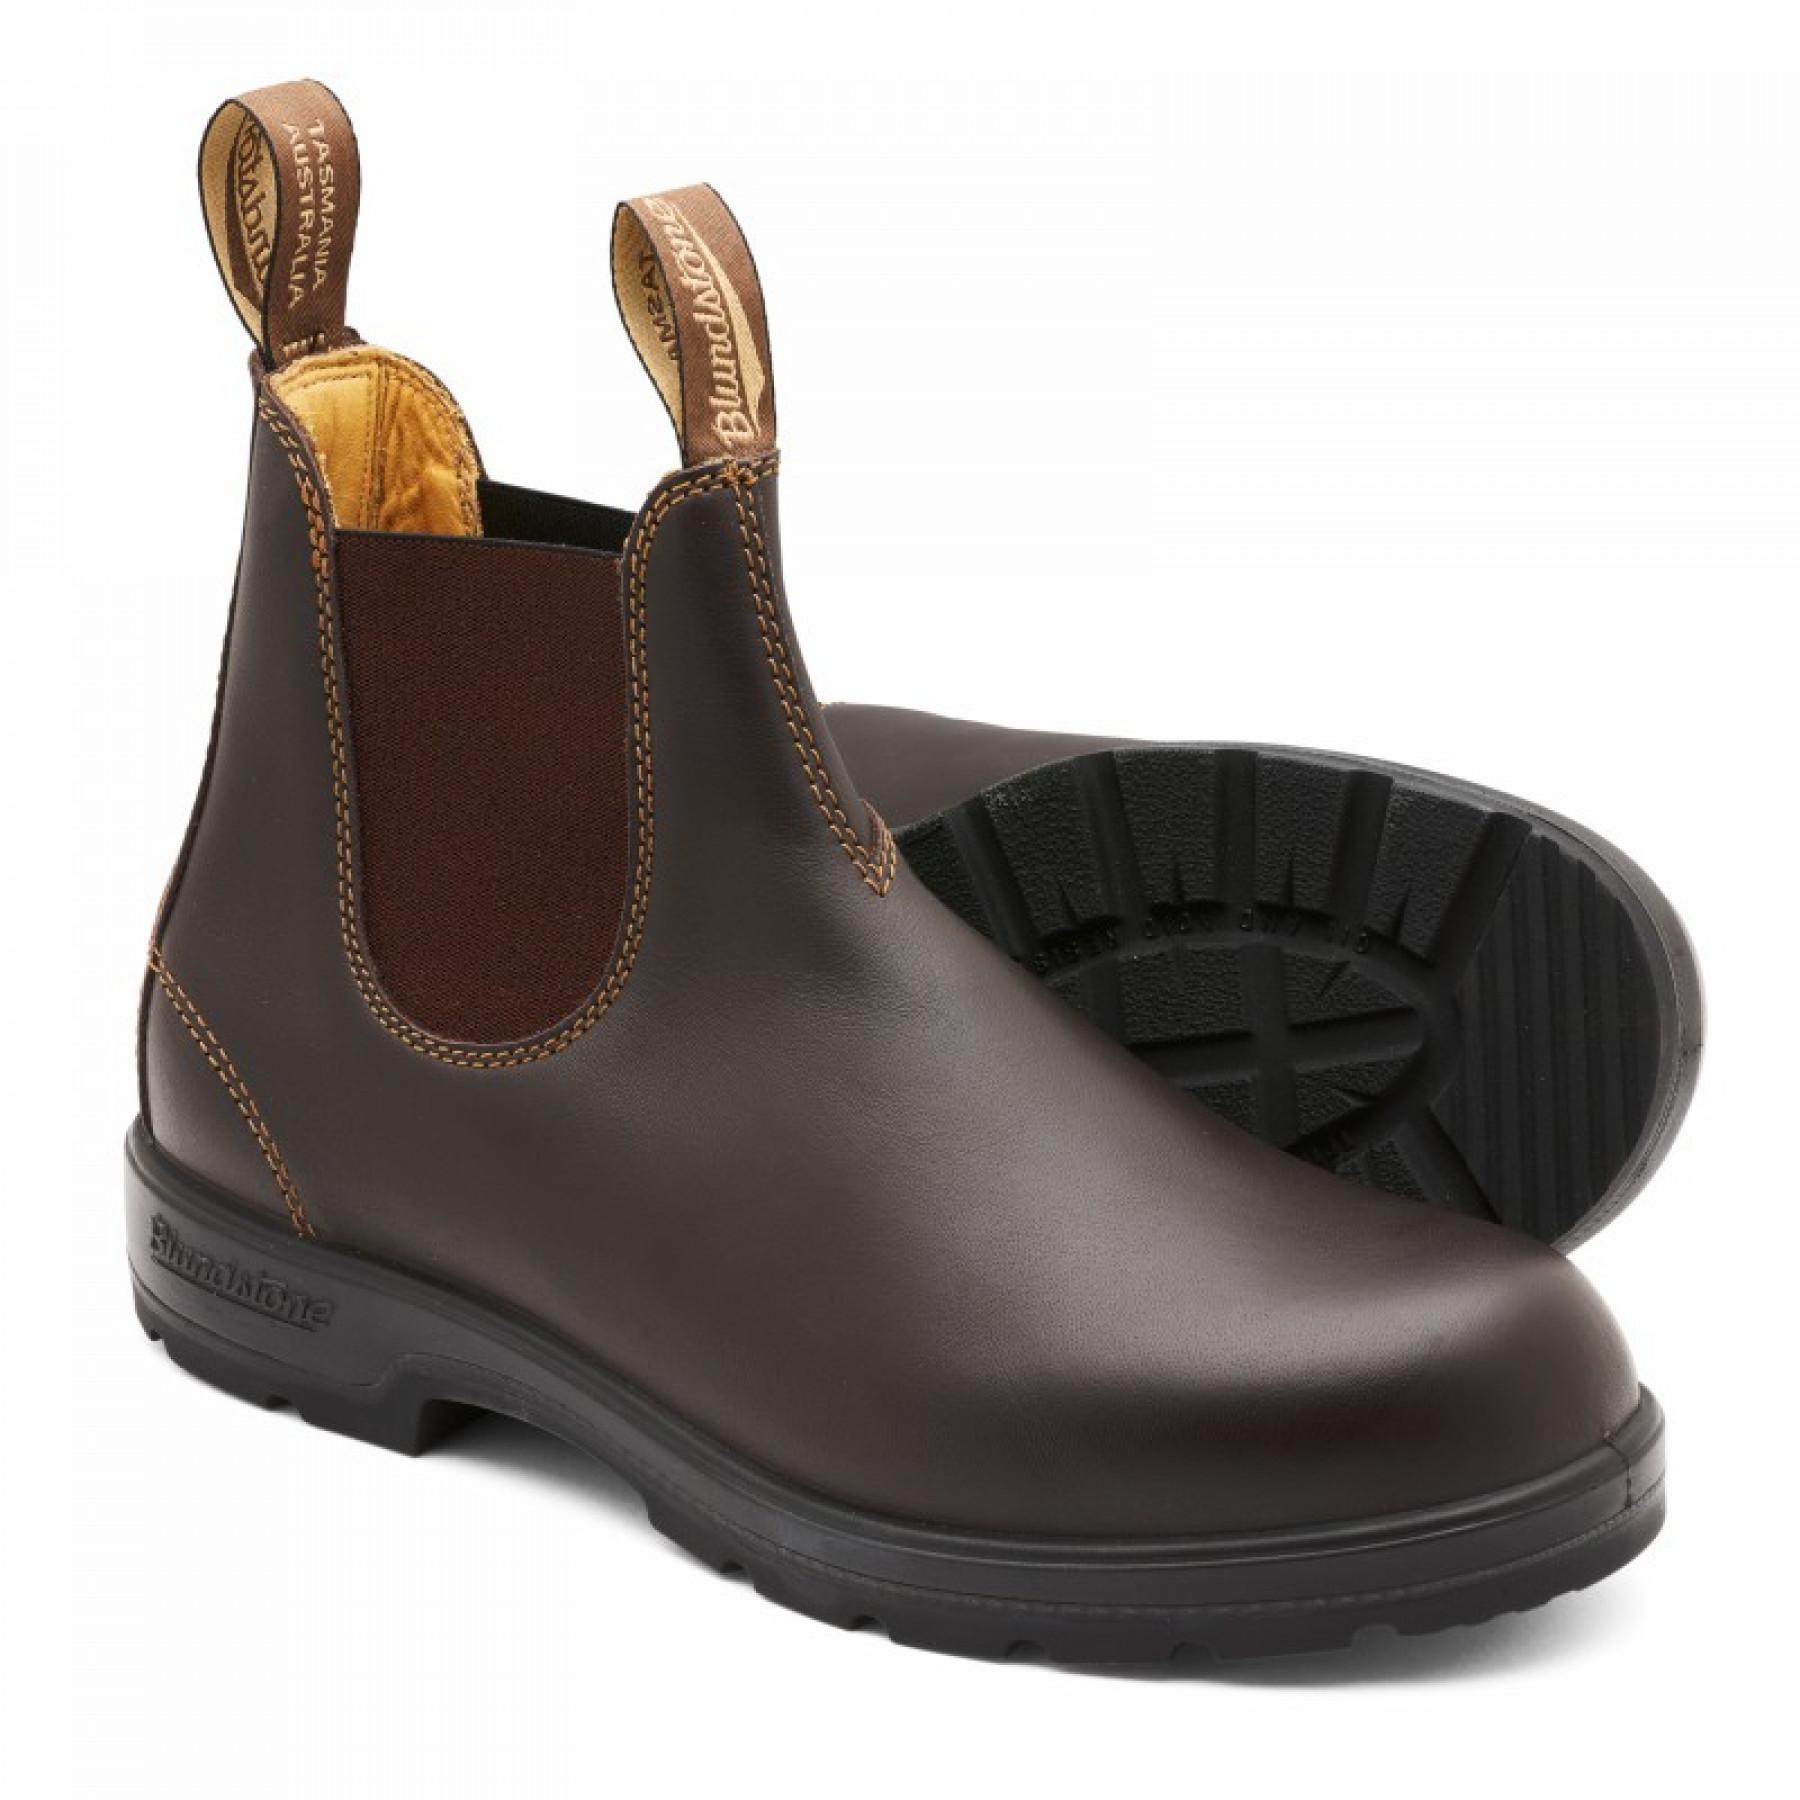 Schuhe Blundstone Classic Chelsea Boots 550 Walnut Brown